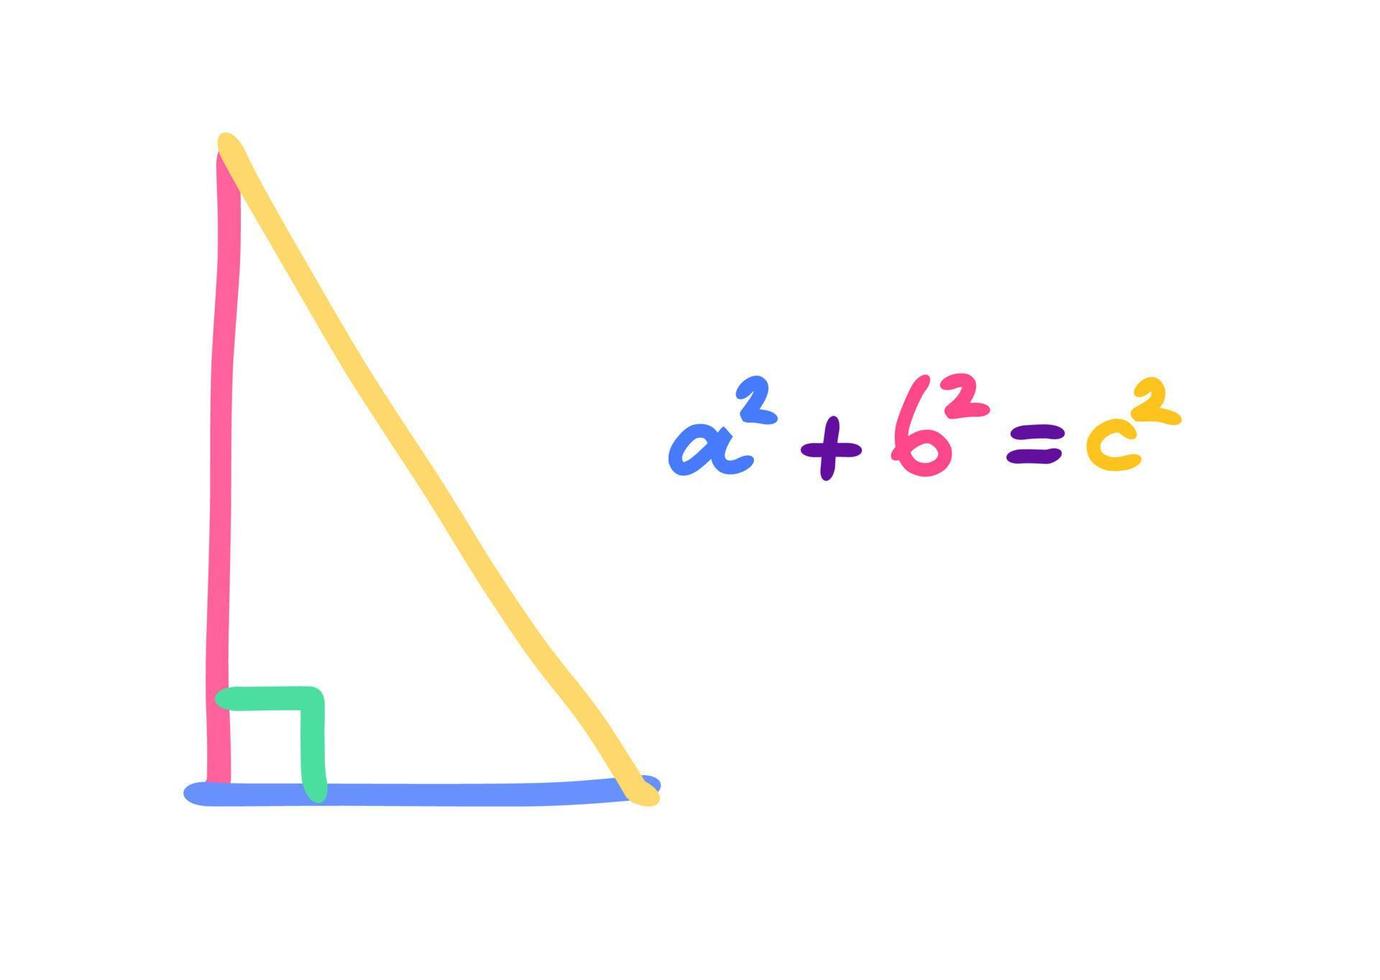 Pythagoras-Mathematikgleichungs-Illustrationsvektor für Mathematik-Dreieck-Trigonometrie-Ausbildung vektor